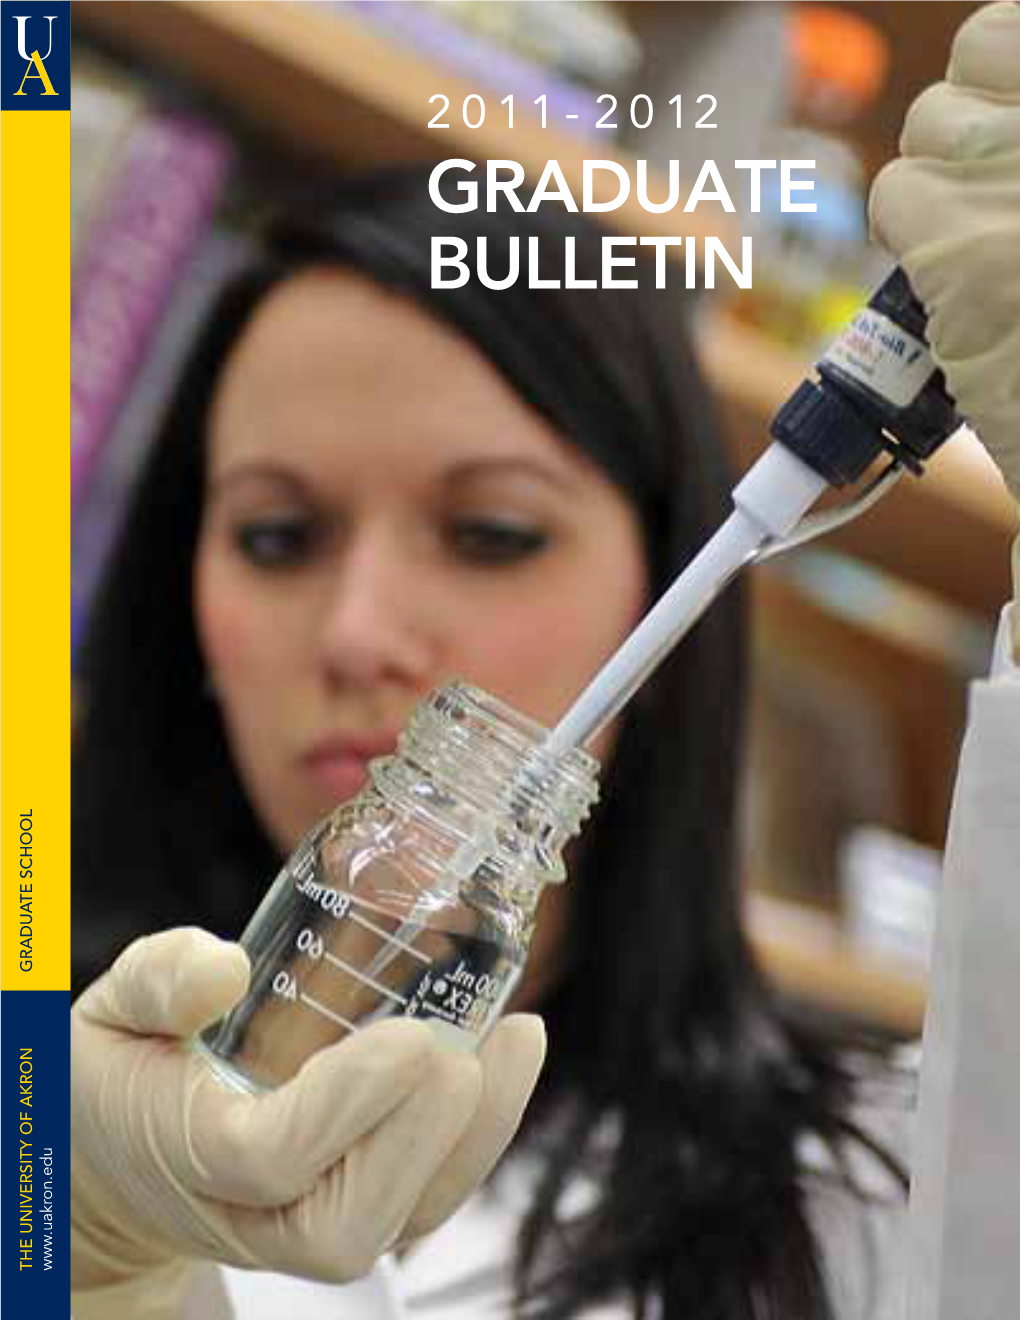 Graduate Bulletin Is a Supplement to the University of Akron Undergradu- Ate Bulletin